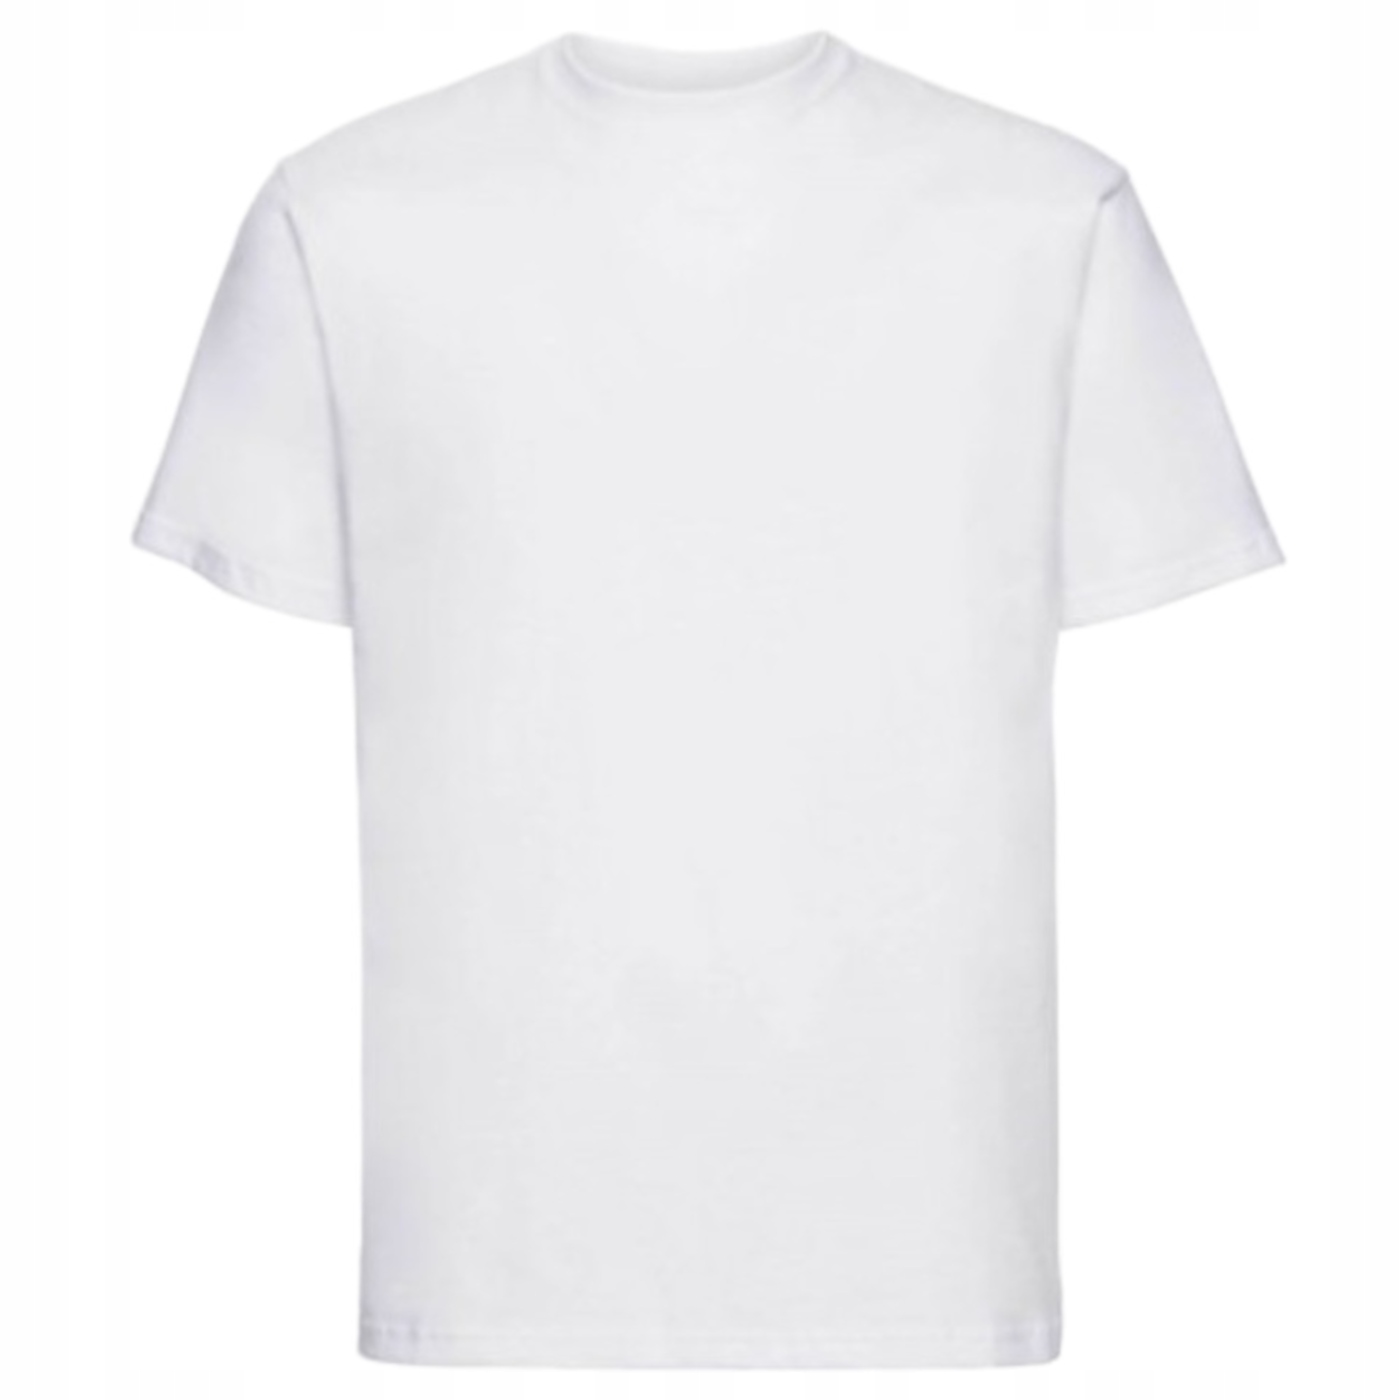 Detské tričko biele WF, bavlna 116/122